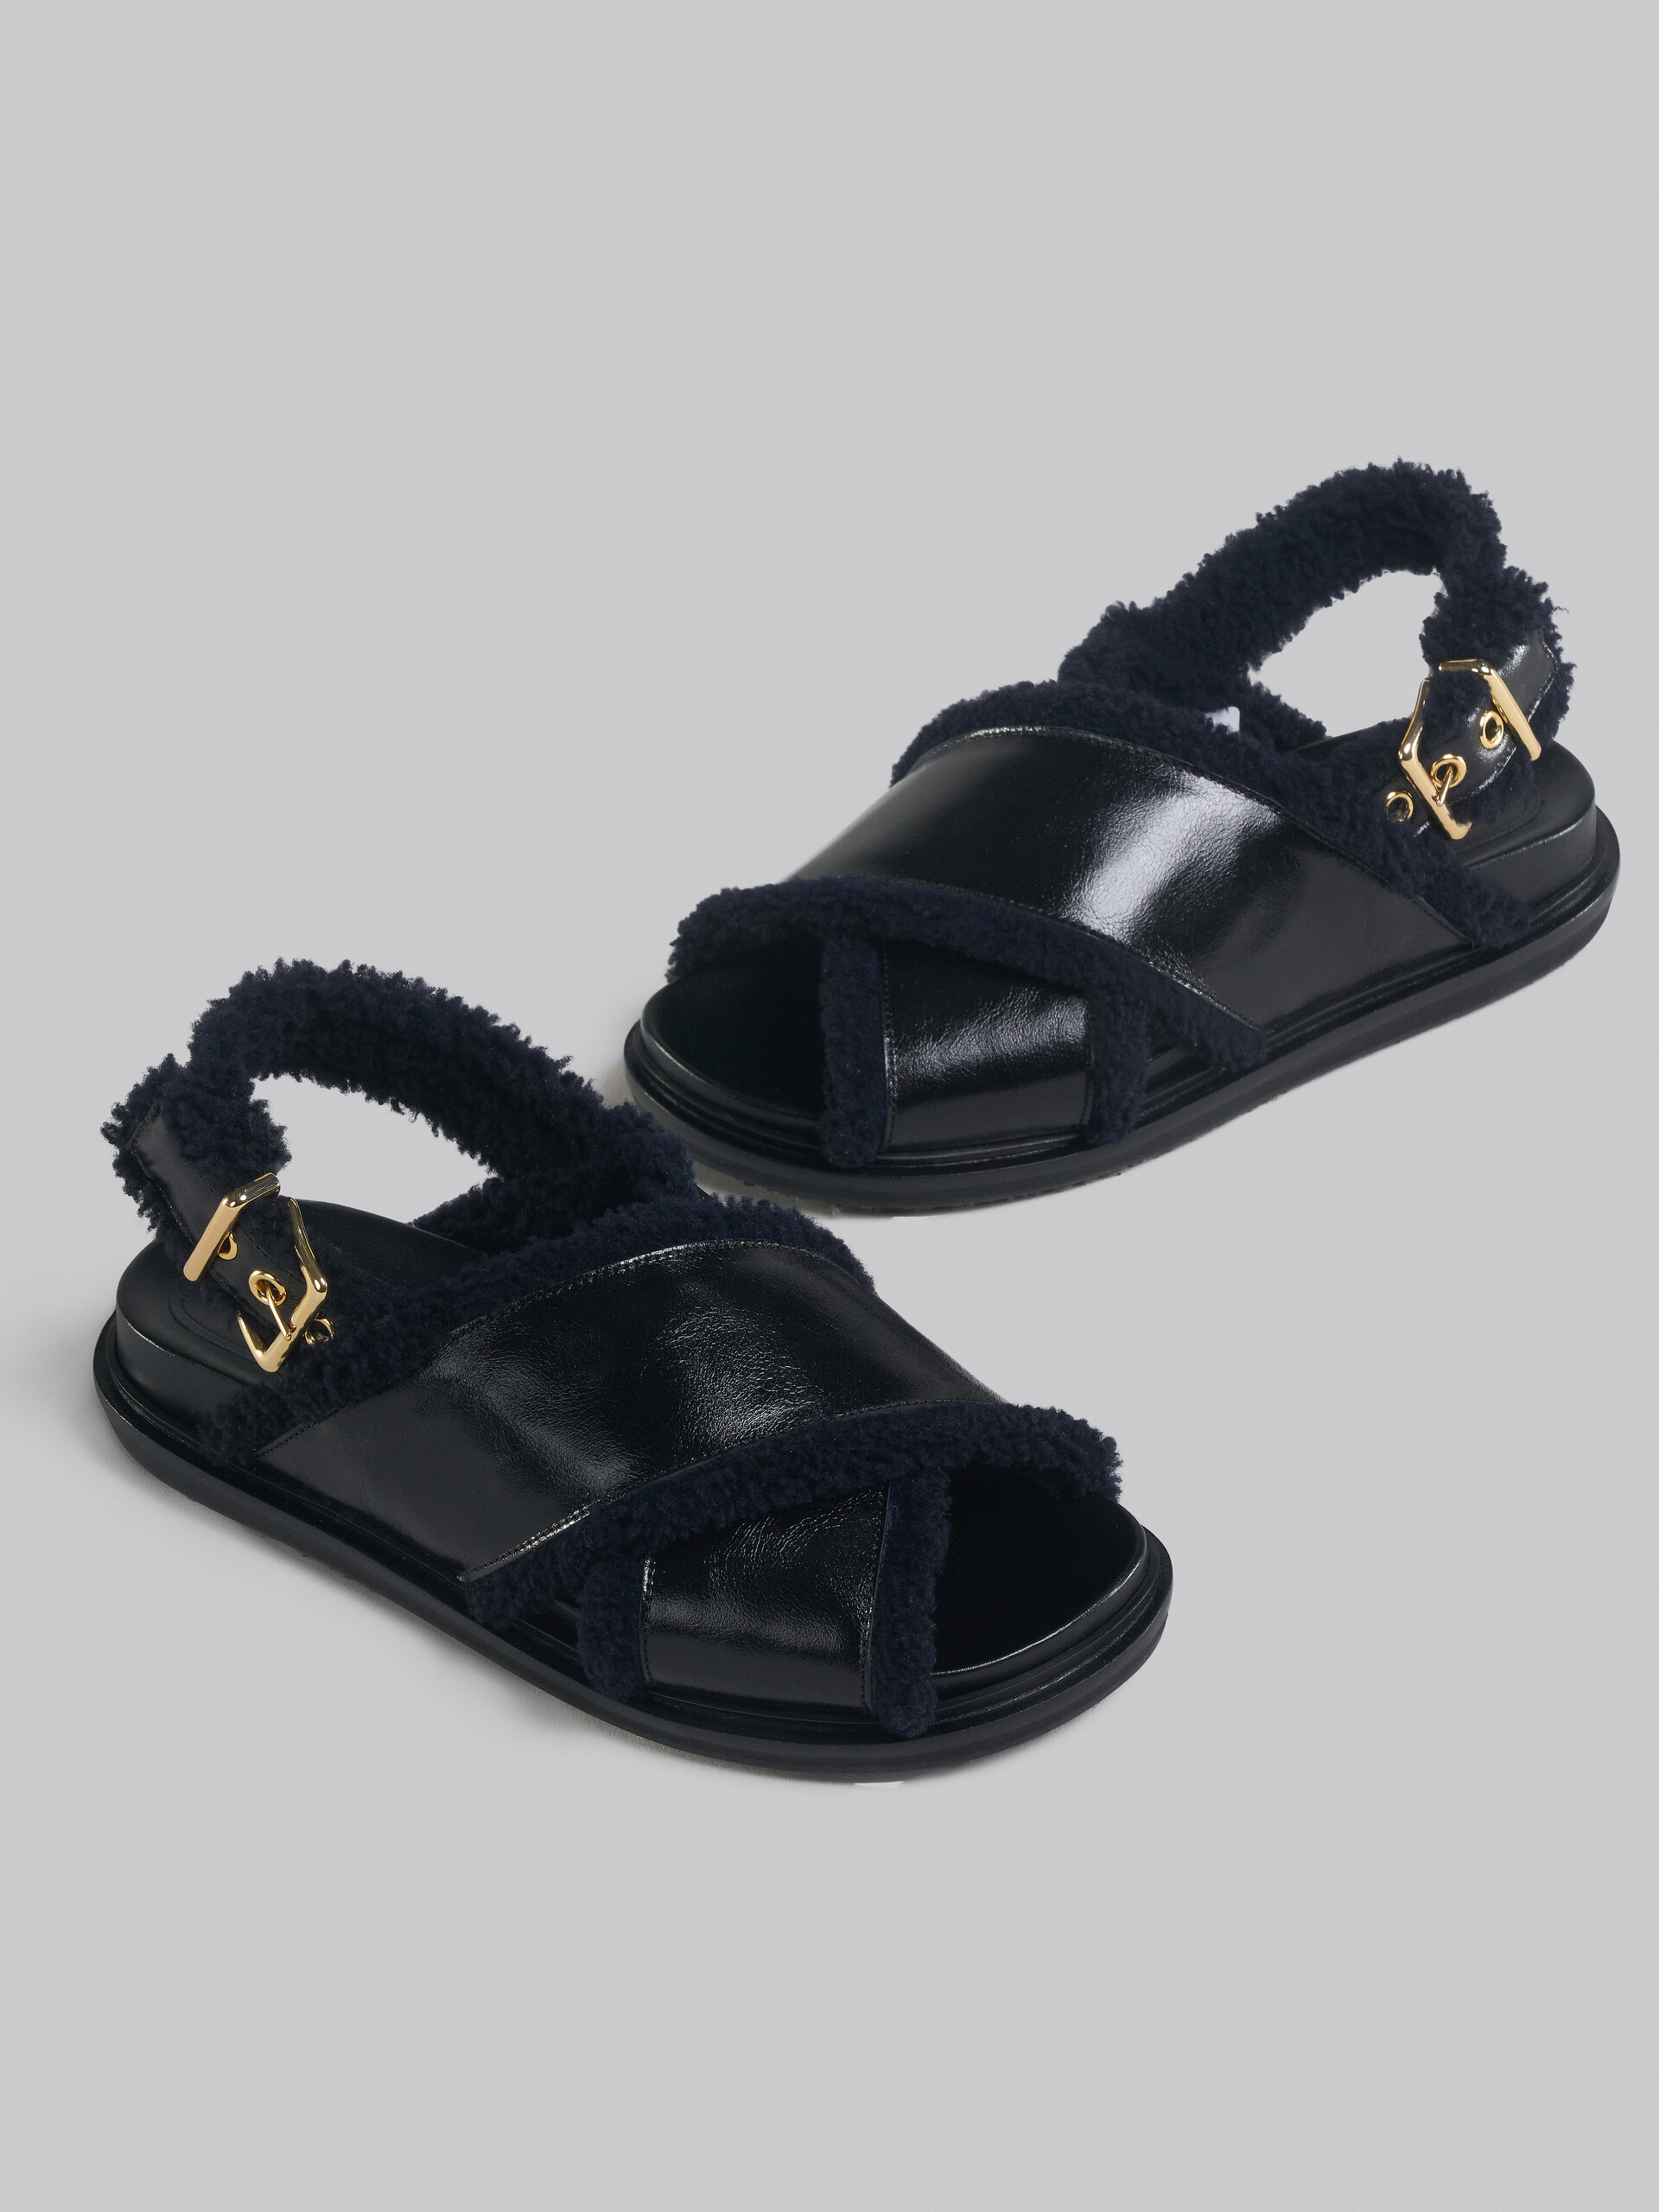 Black leather and merinos Fussbett - Sandals - Image 5